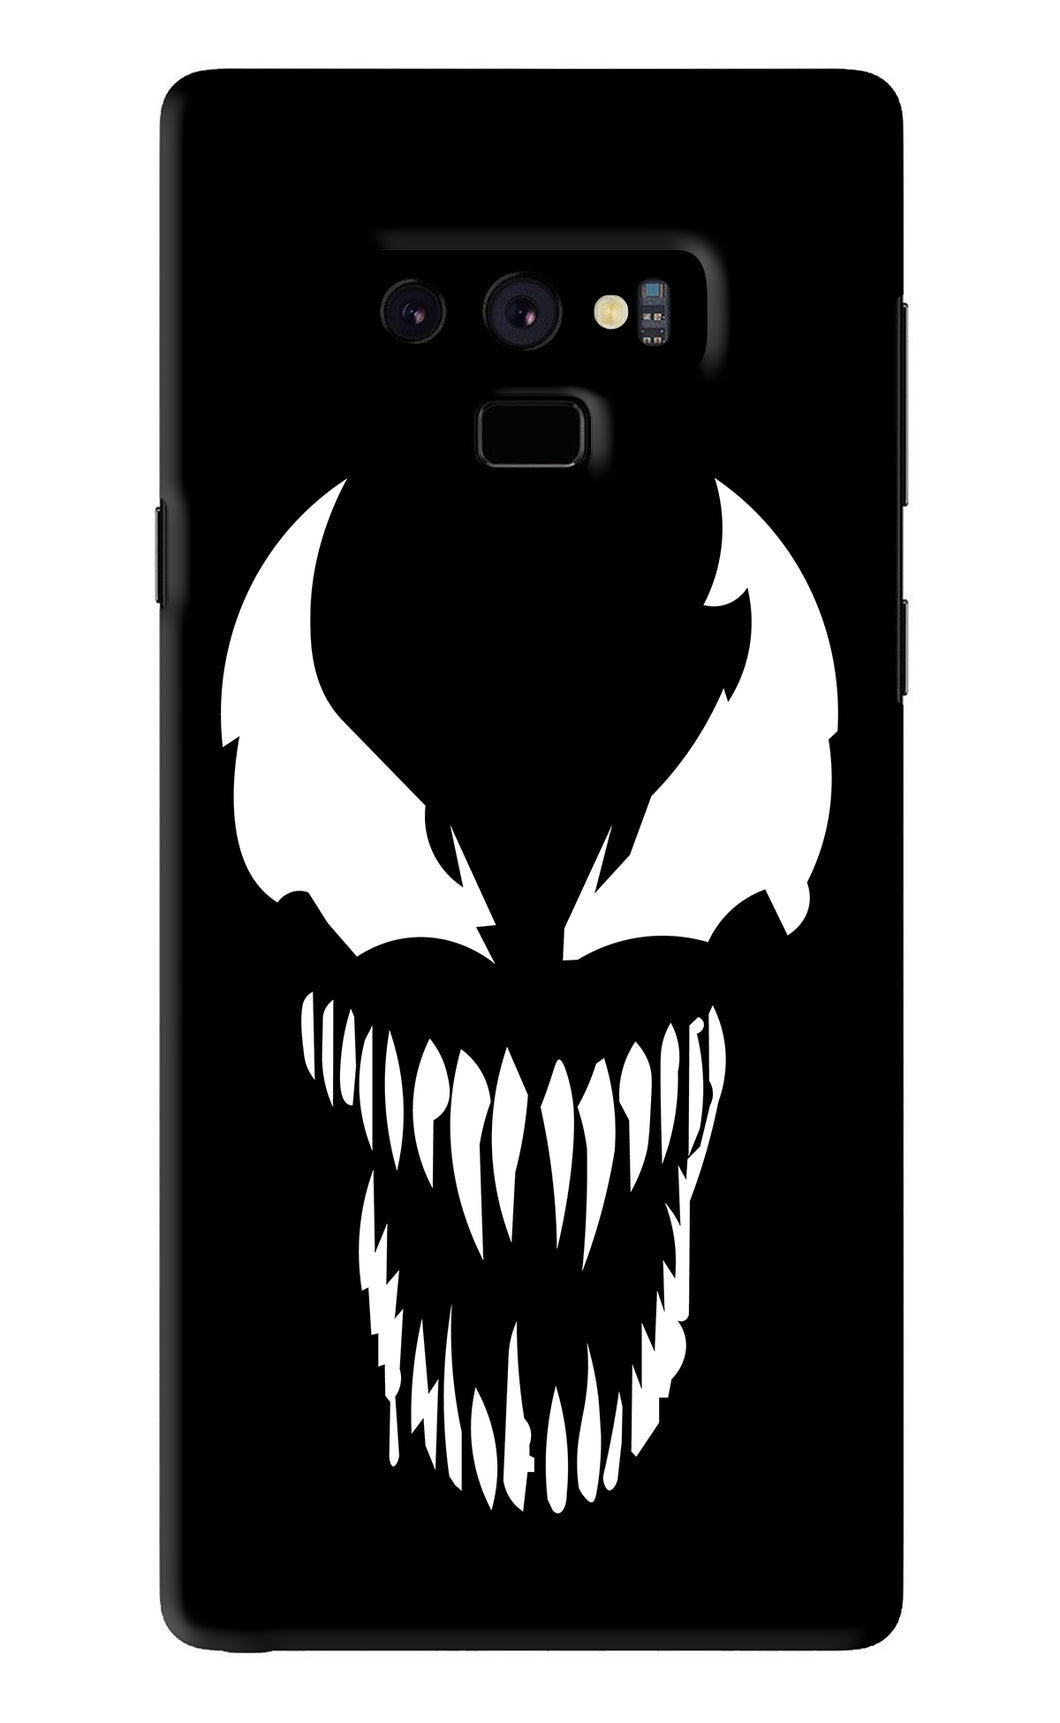 Venom Samsung Galaxy Note 9 Back Skin Wrap